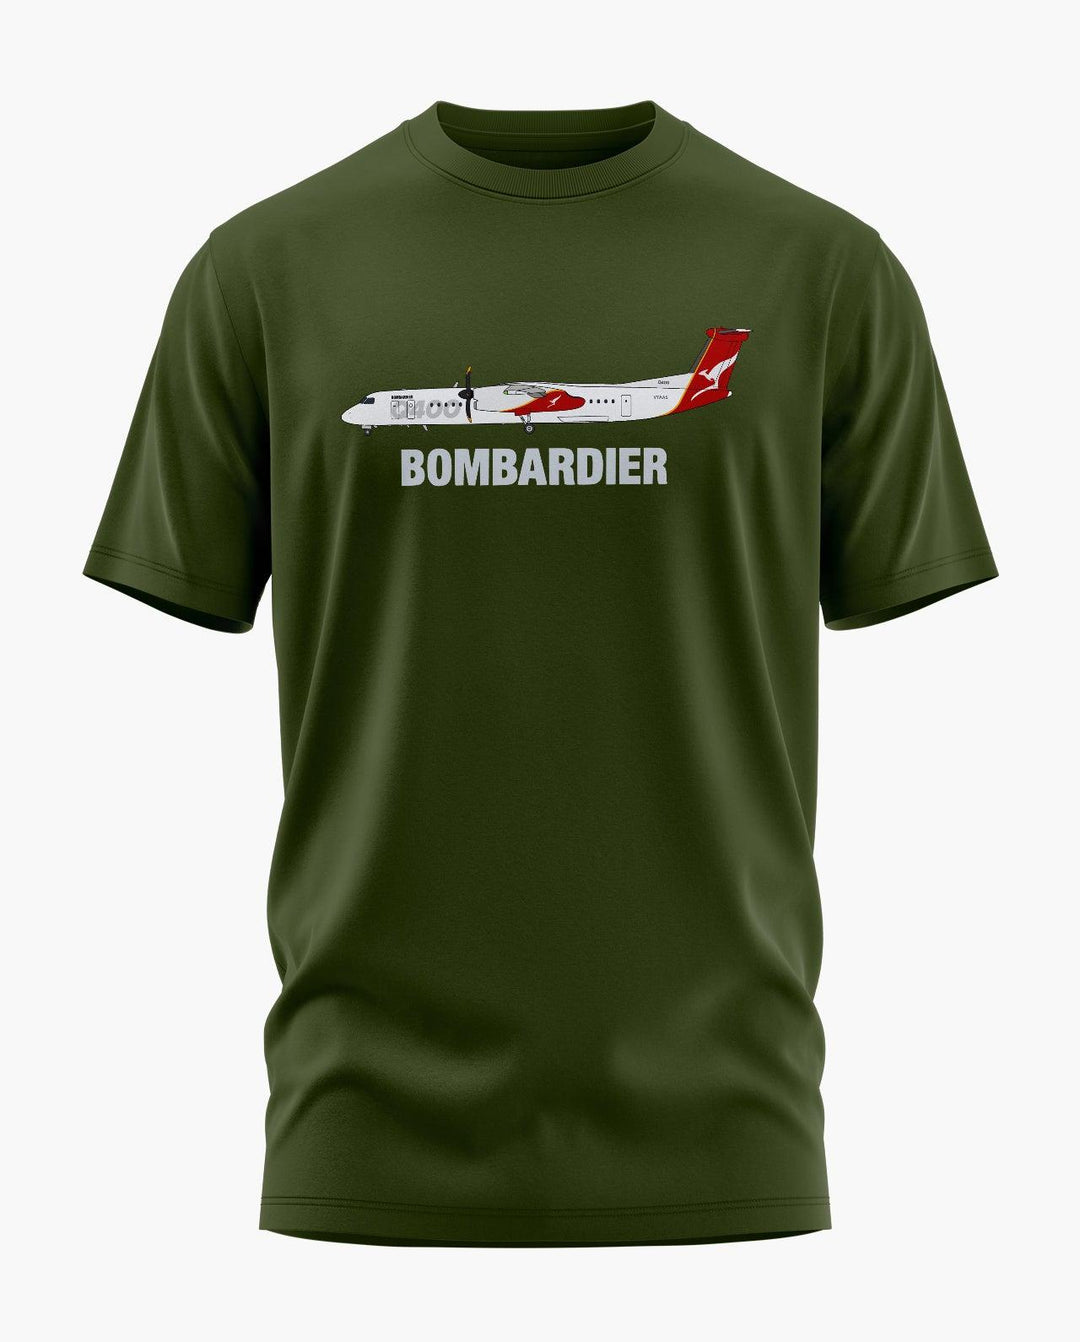 Bombardier Q400 T-Shirt - Aero Armour